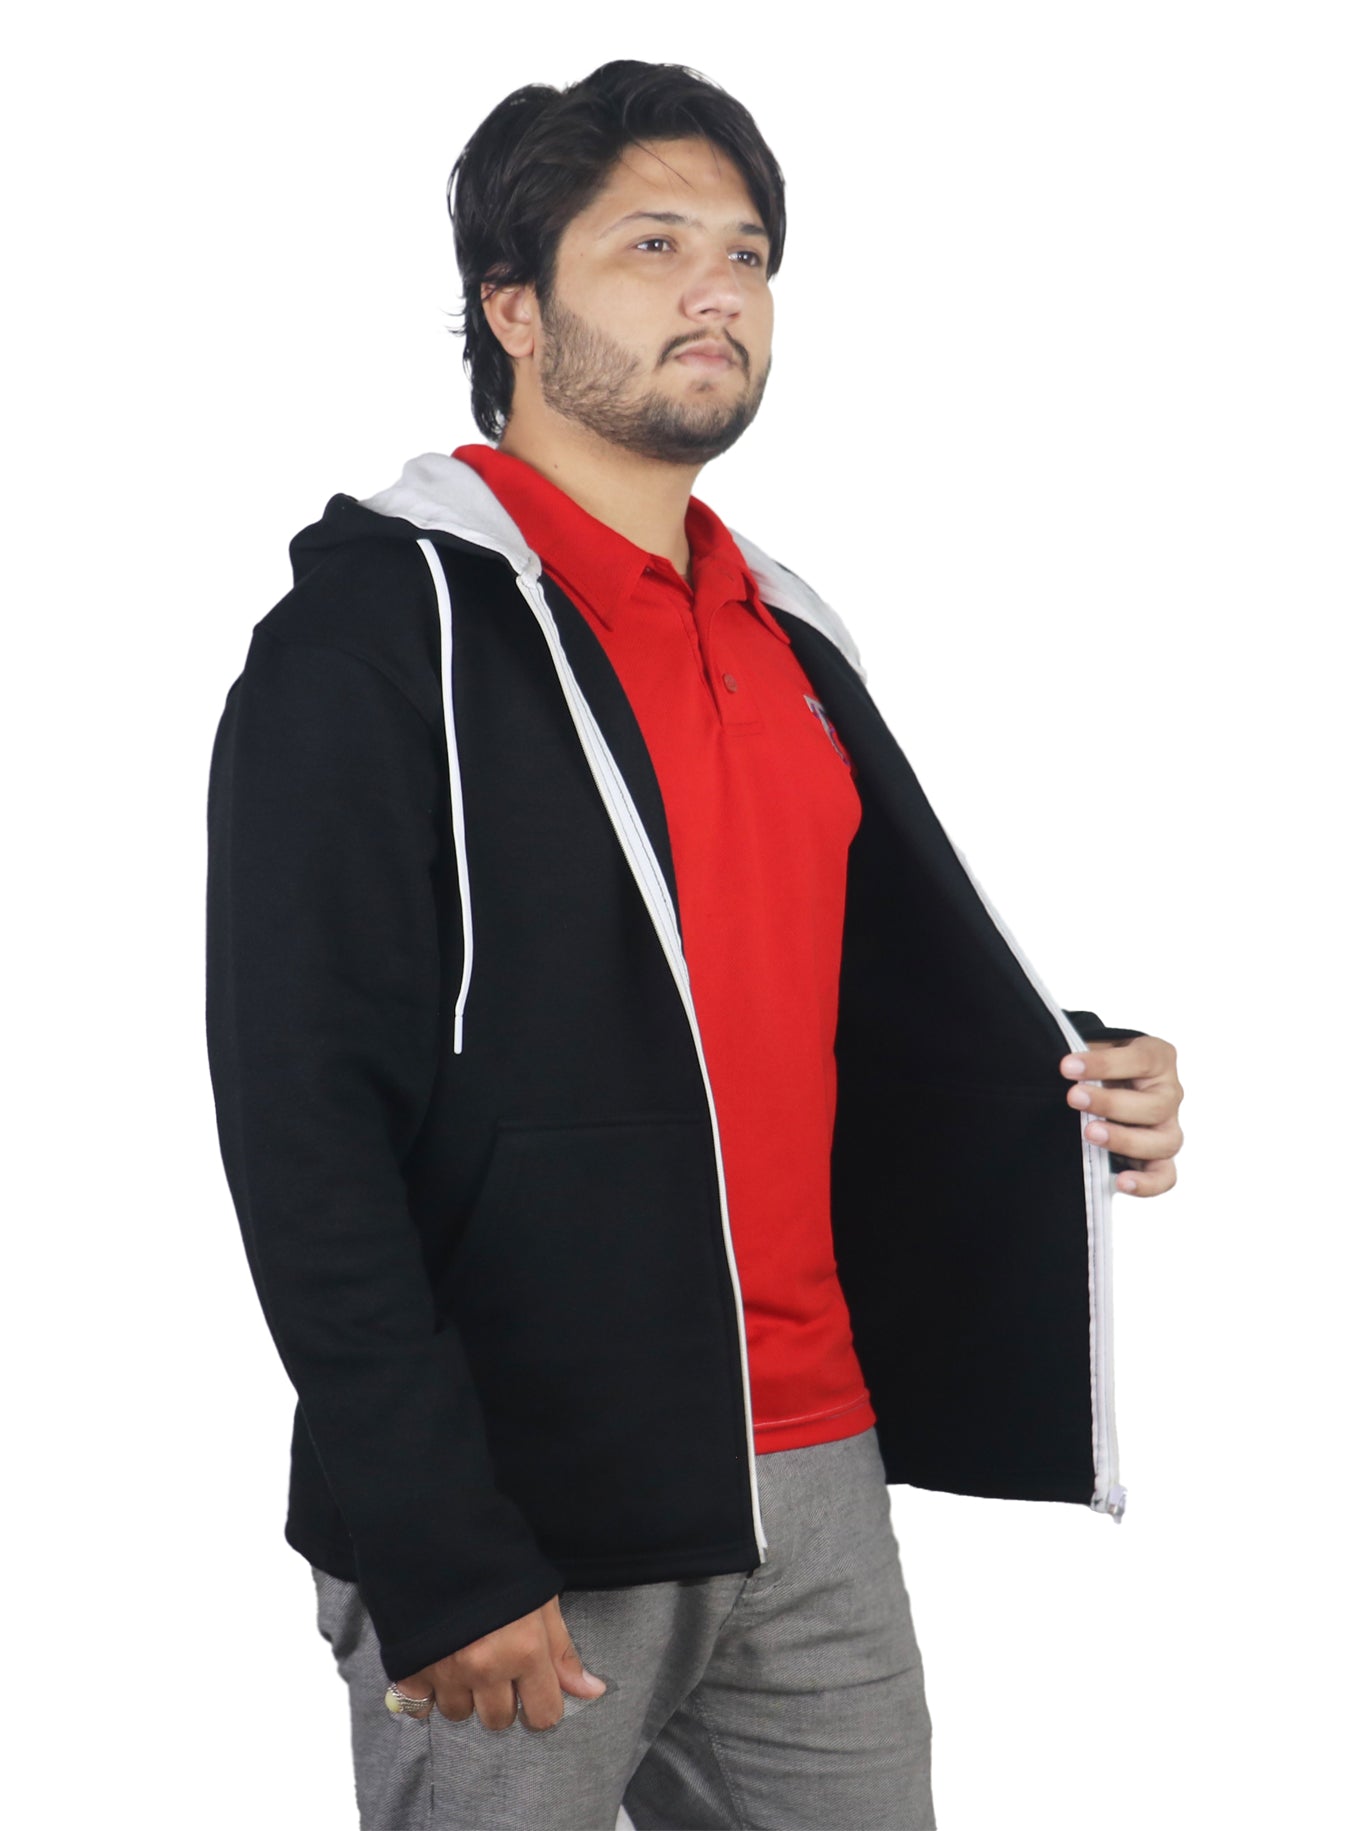 Bahob® Men's Hoodies Zip Up Sweatshirt Jackets Lightweight Long Sleeve Zipped Hoodie Jumper Tops Sweater Hoodies for Men S-3XL - Bahob